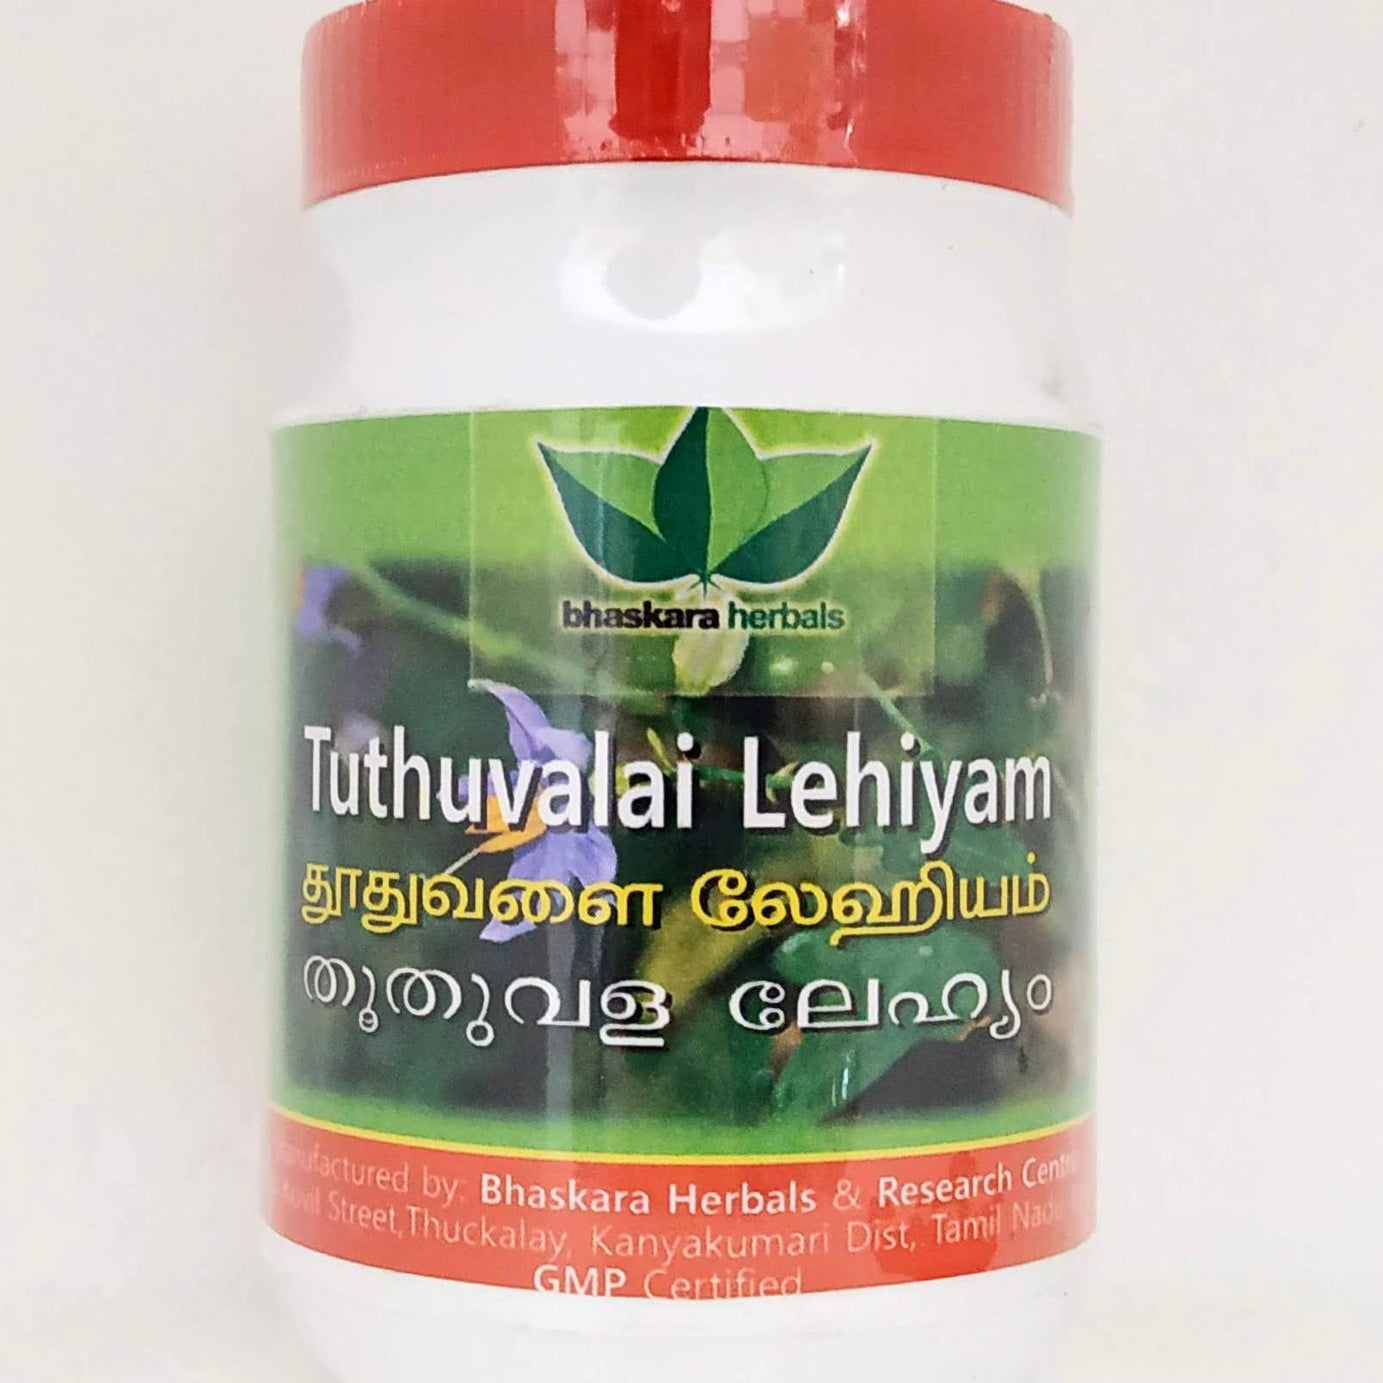 Shop Thuthuvalai lehyam 250gm at price 130.00 from Bhaskara Herbals Online - Ayush Care